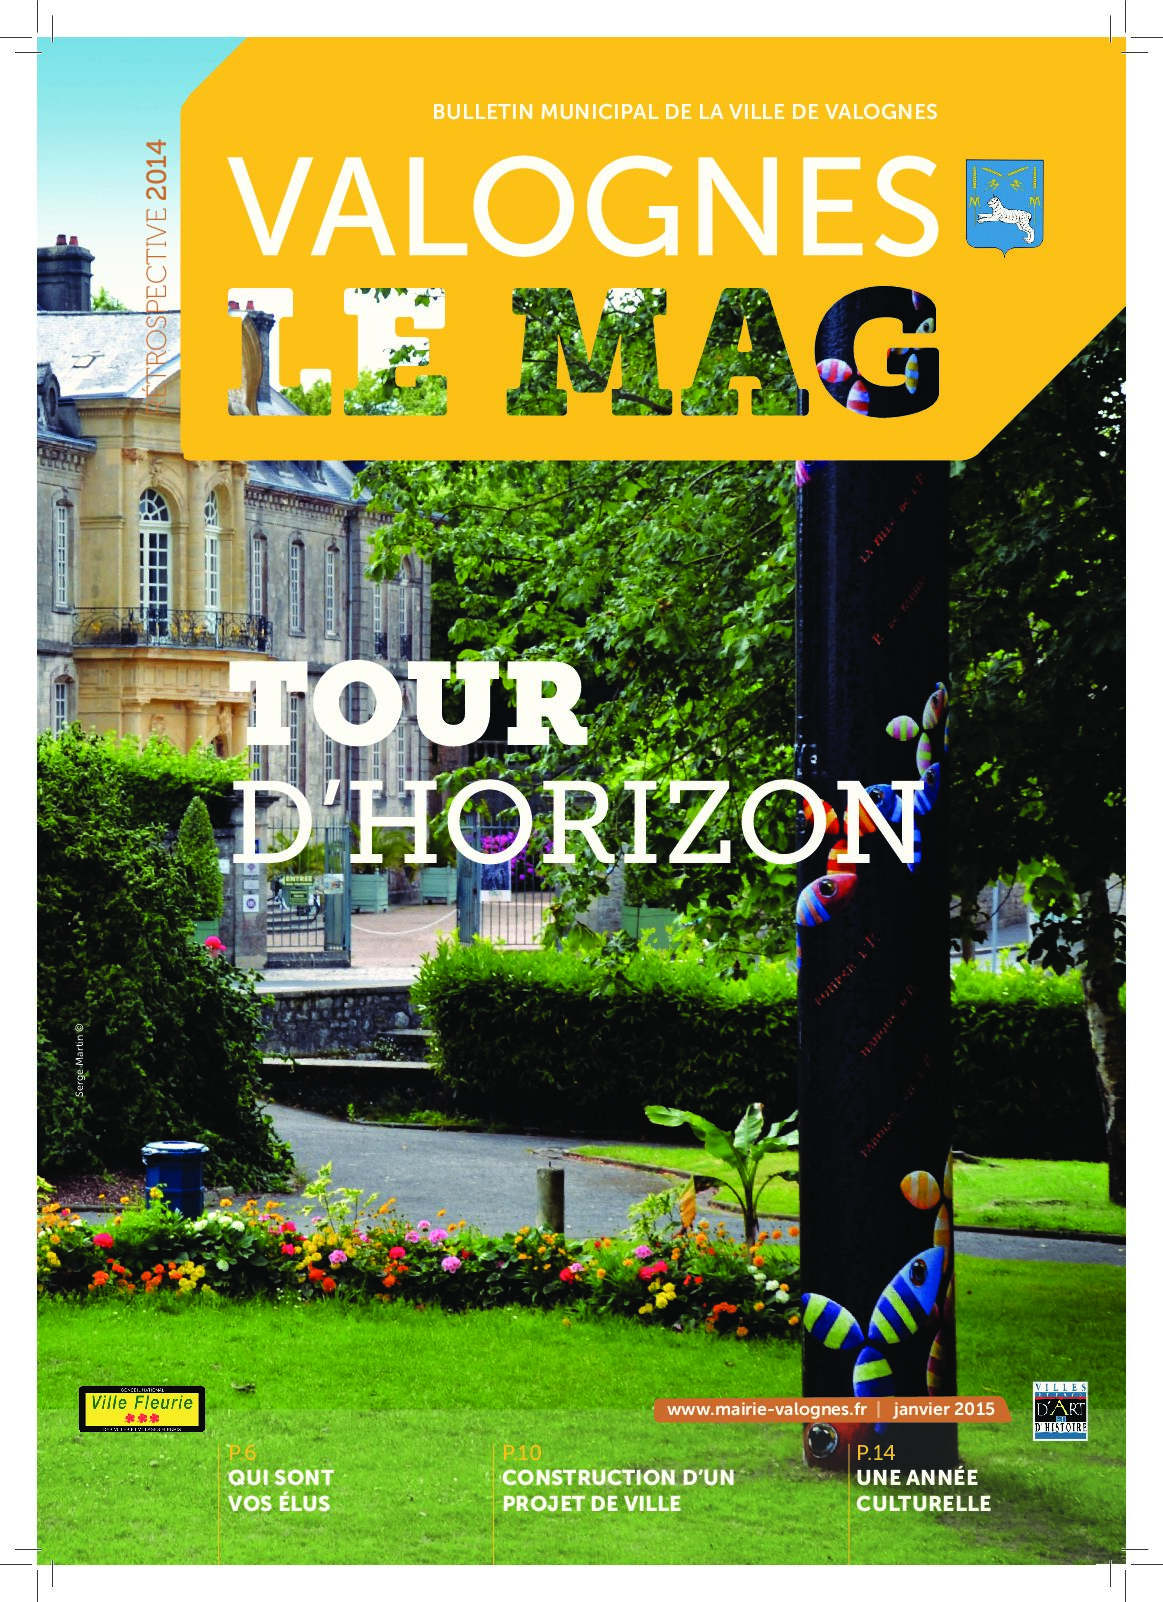 Bulletin municipal 2014 - Tour d